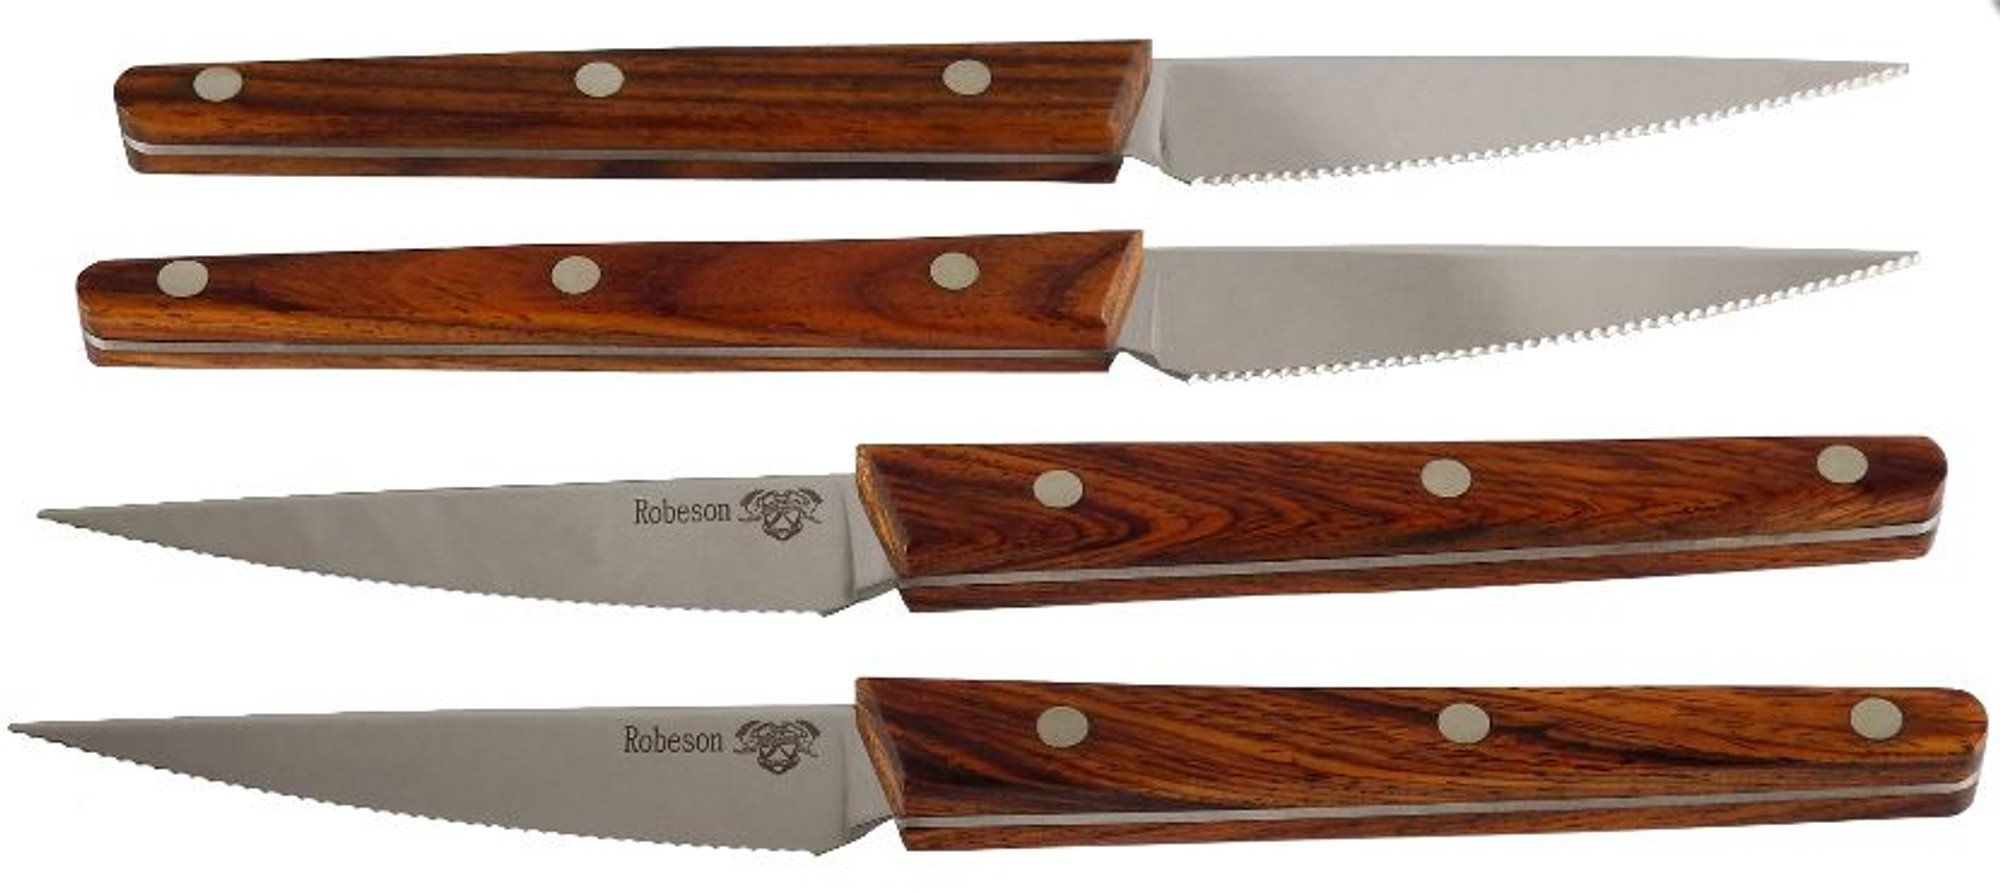 OKC 6416 Robeson Viking Steak Knives Set of 4